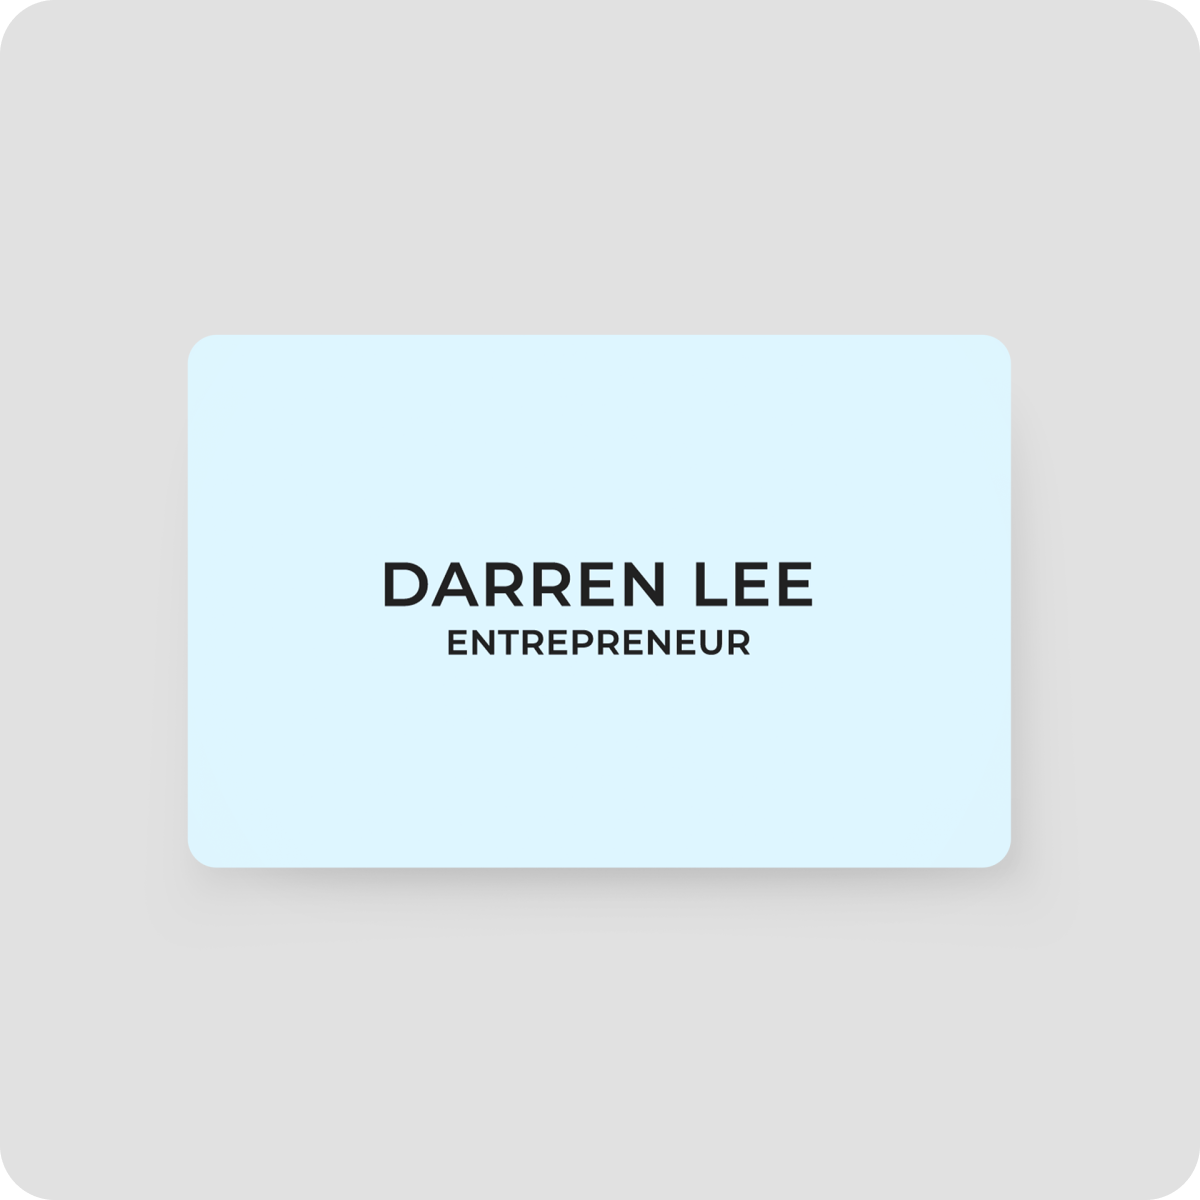 One Good Card: Smart Digital Name Card (Modern) - Personalised Near Field Communication (NFC) Digital Business Cards designs - Sky Blue